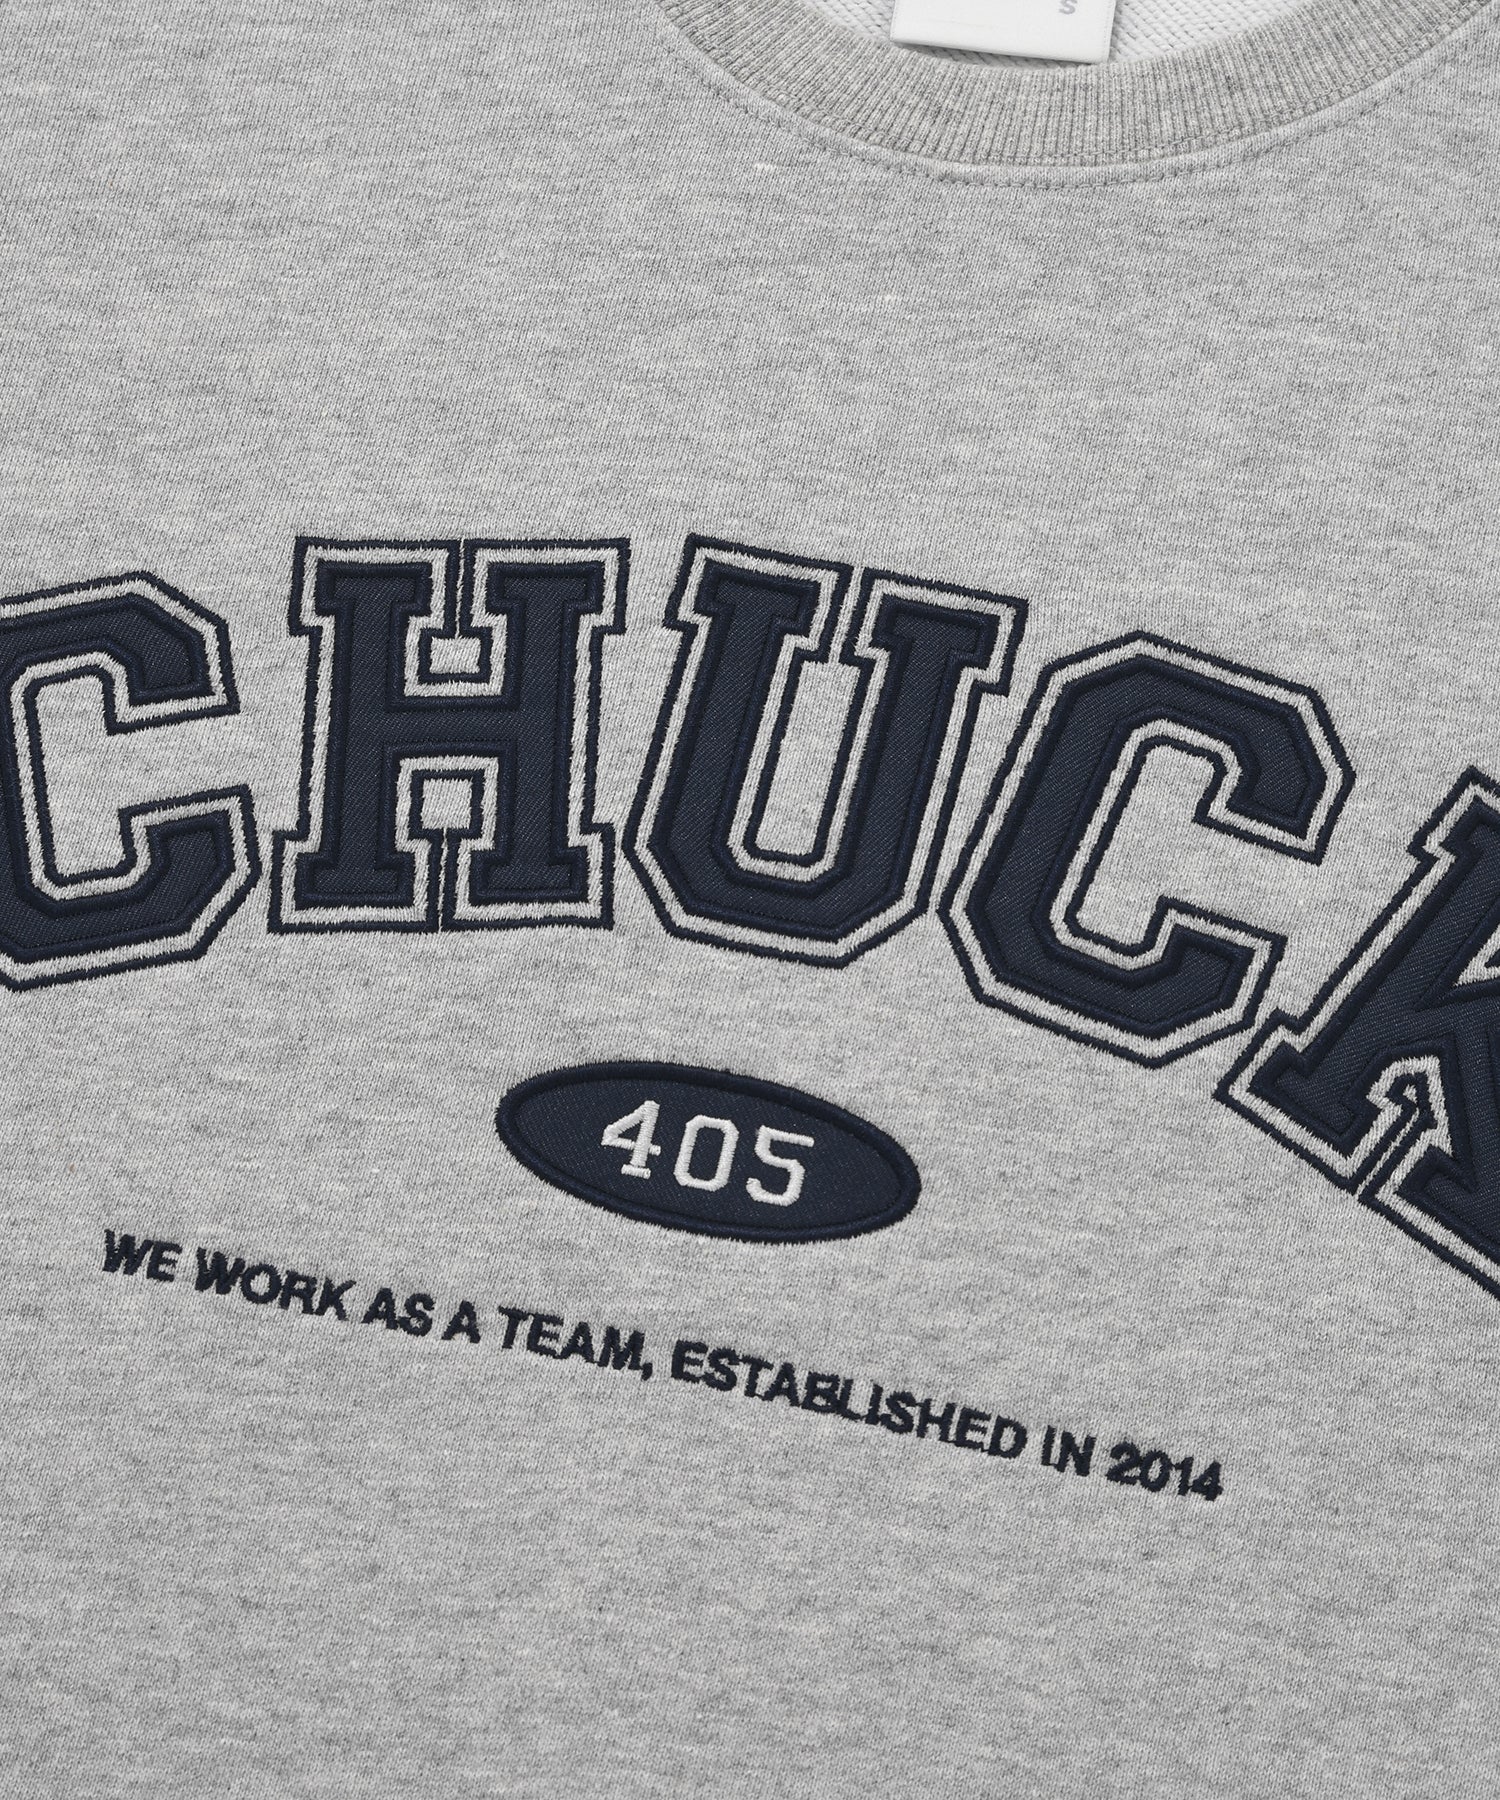 CHUCK アプリケアーチロゴスウェットシャツ / CHUCK APPLIQUE ARCH LOGO SWEATSHIRT (GRAY)